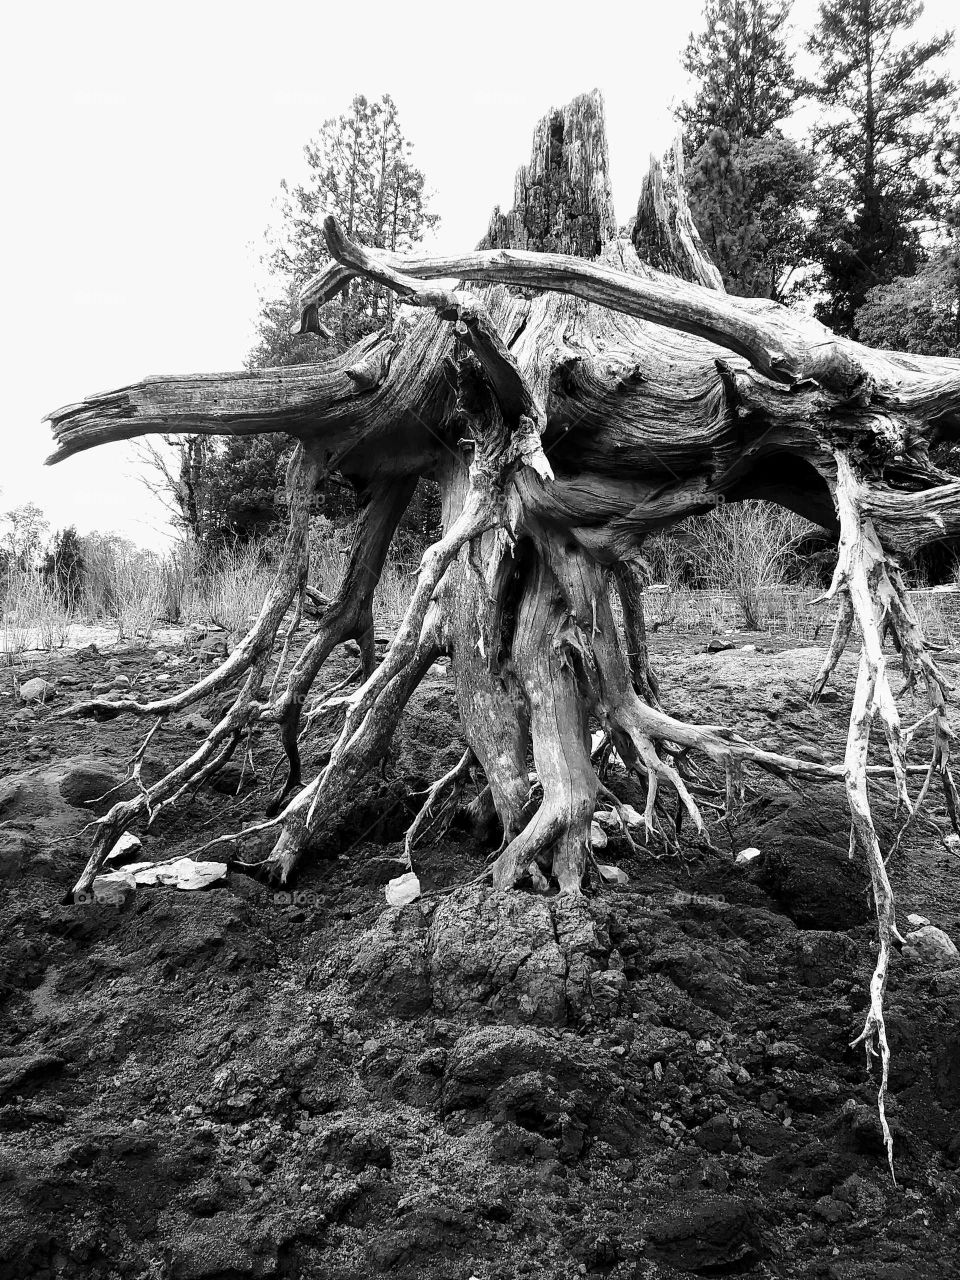 stump roots in b/w